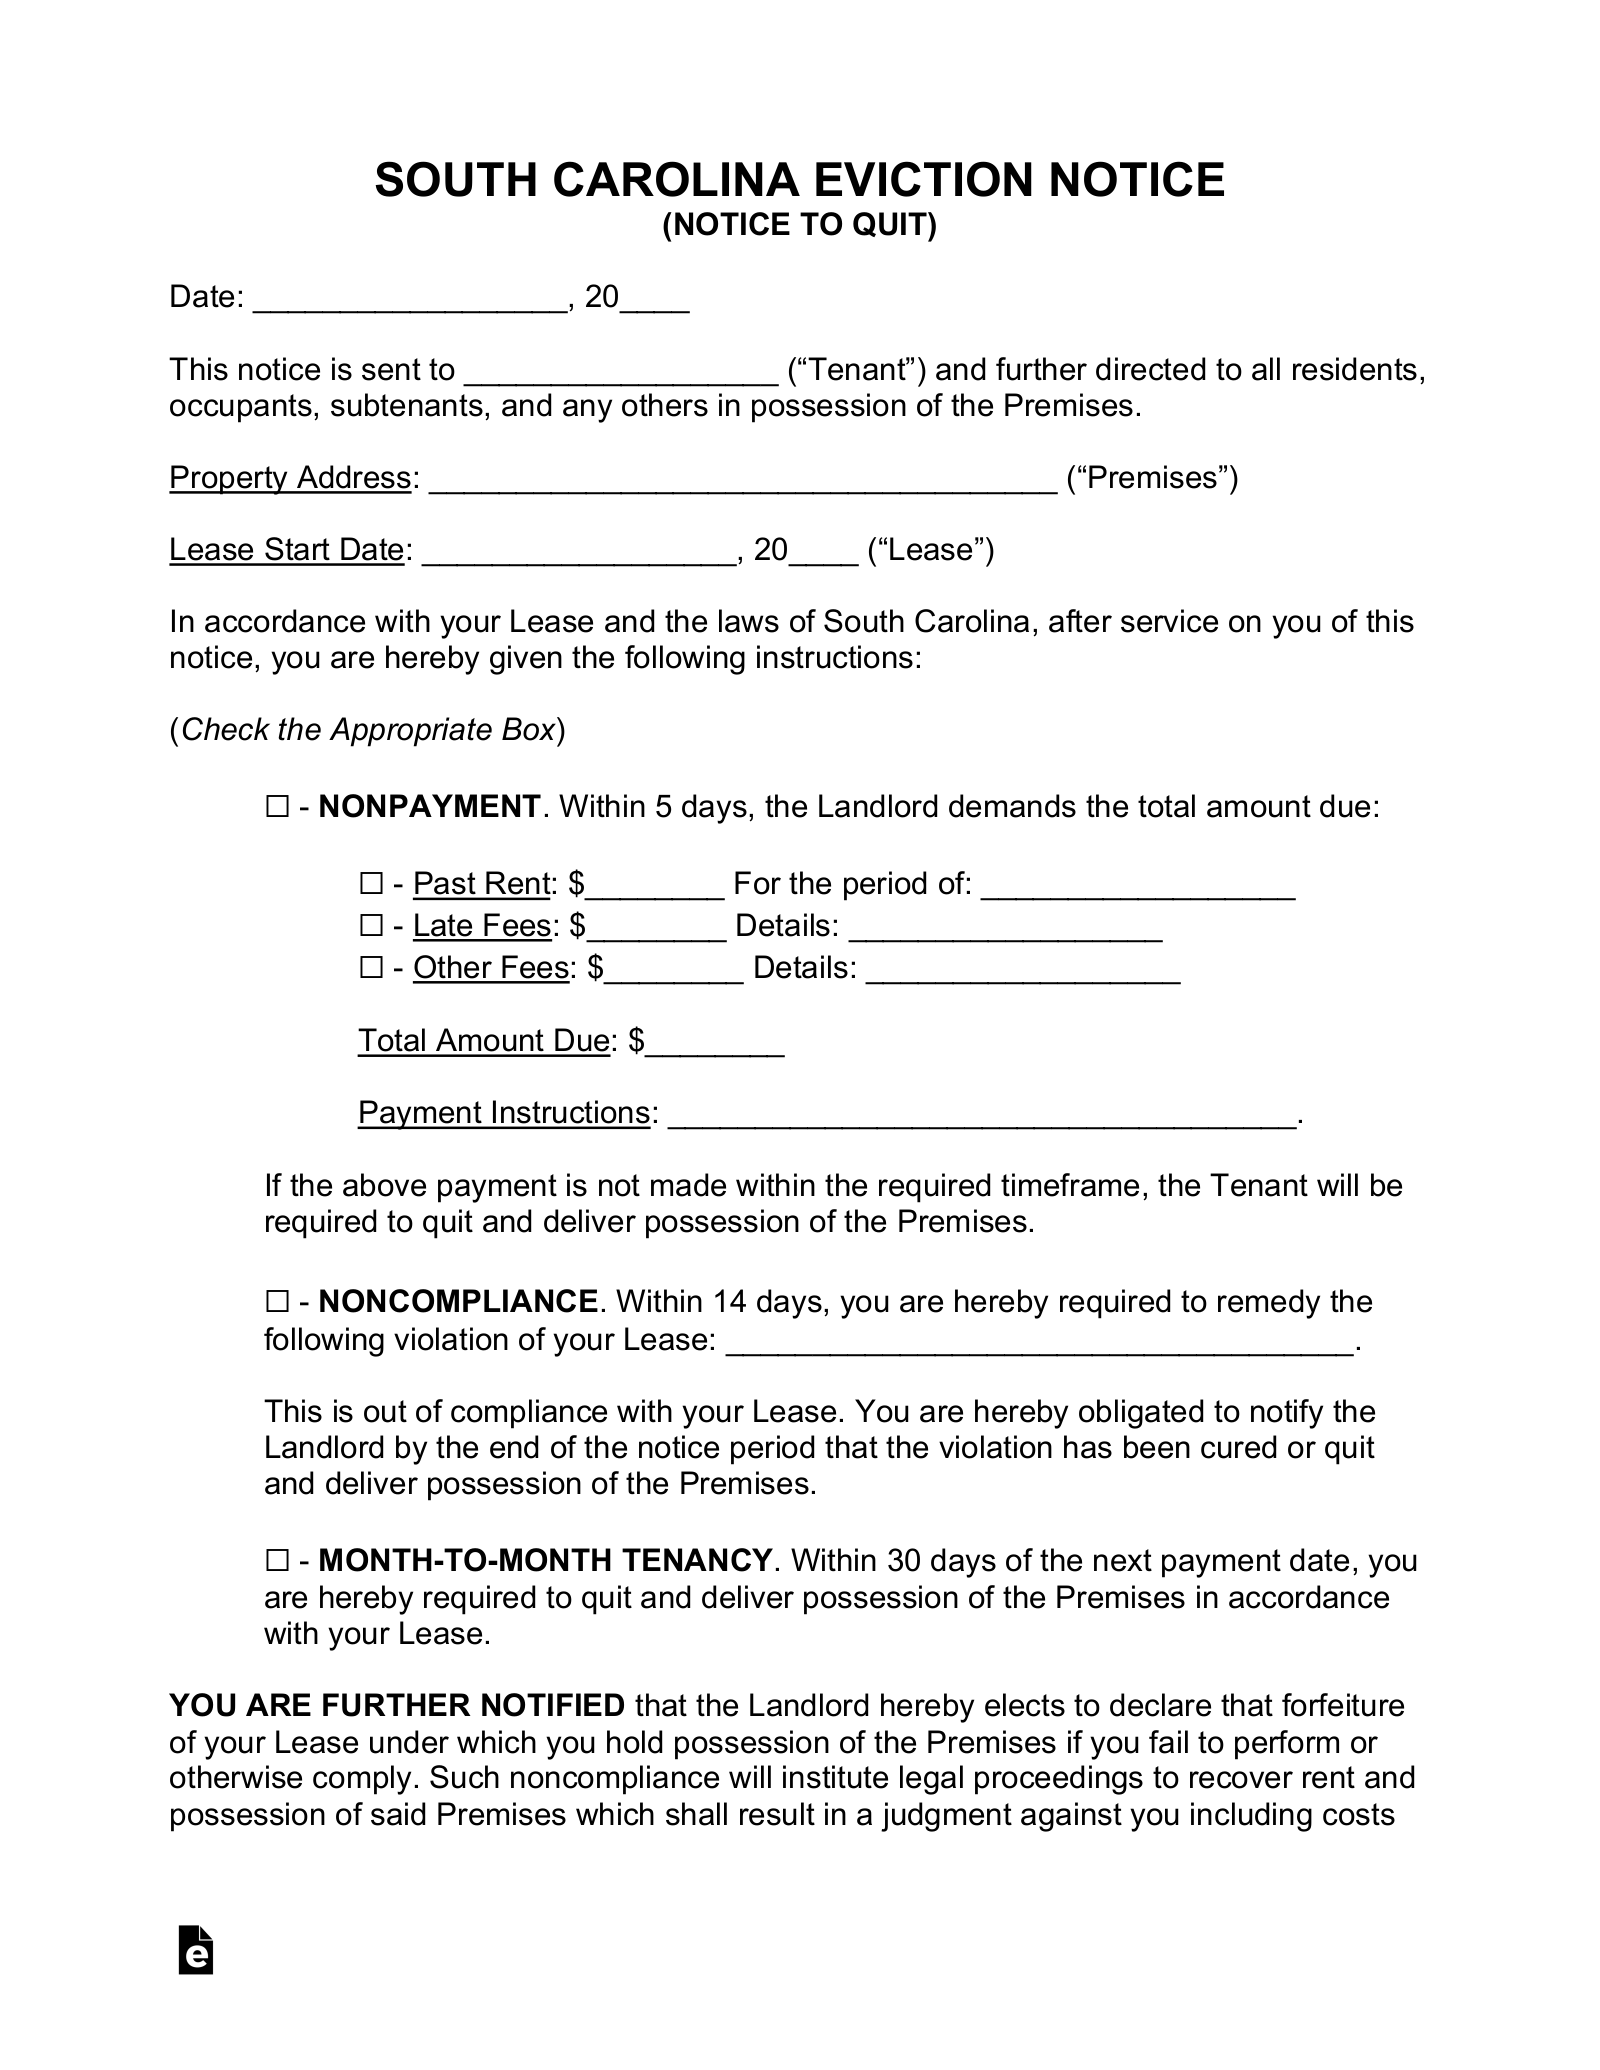 South Carolina Eviction Notice Forms (3)